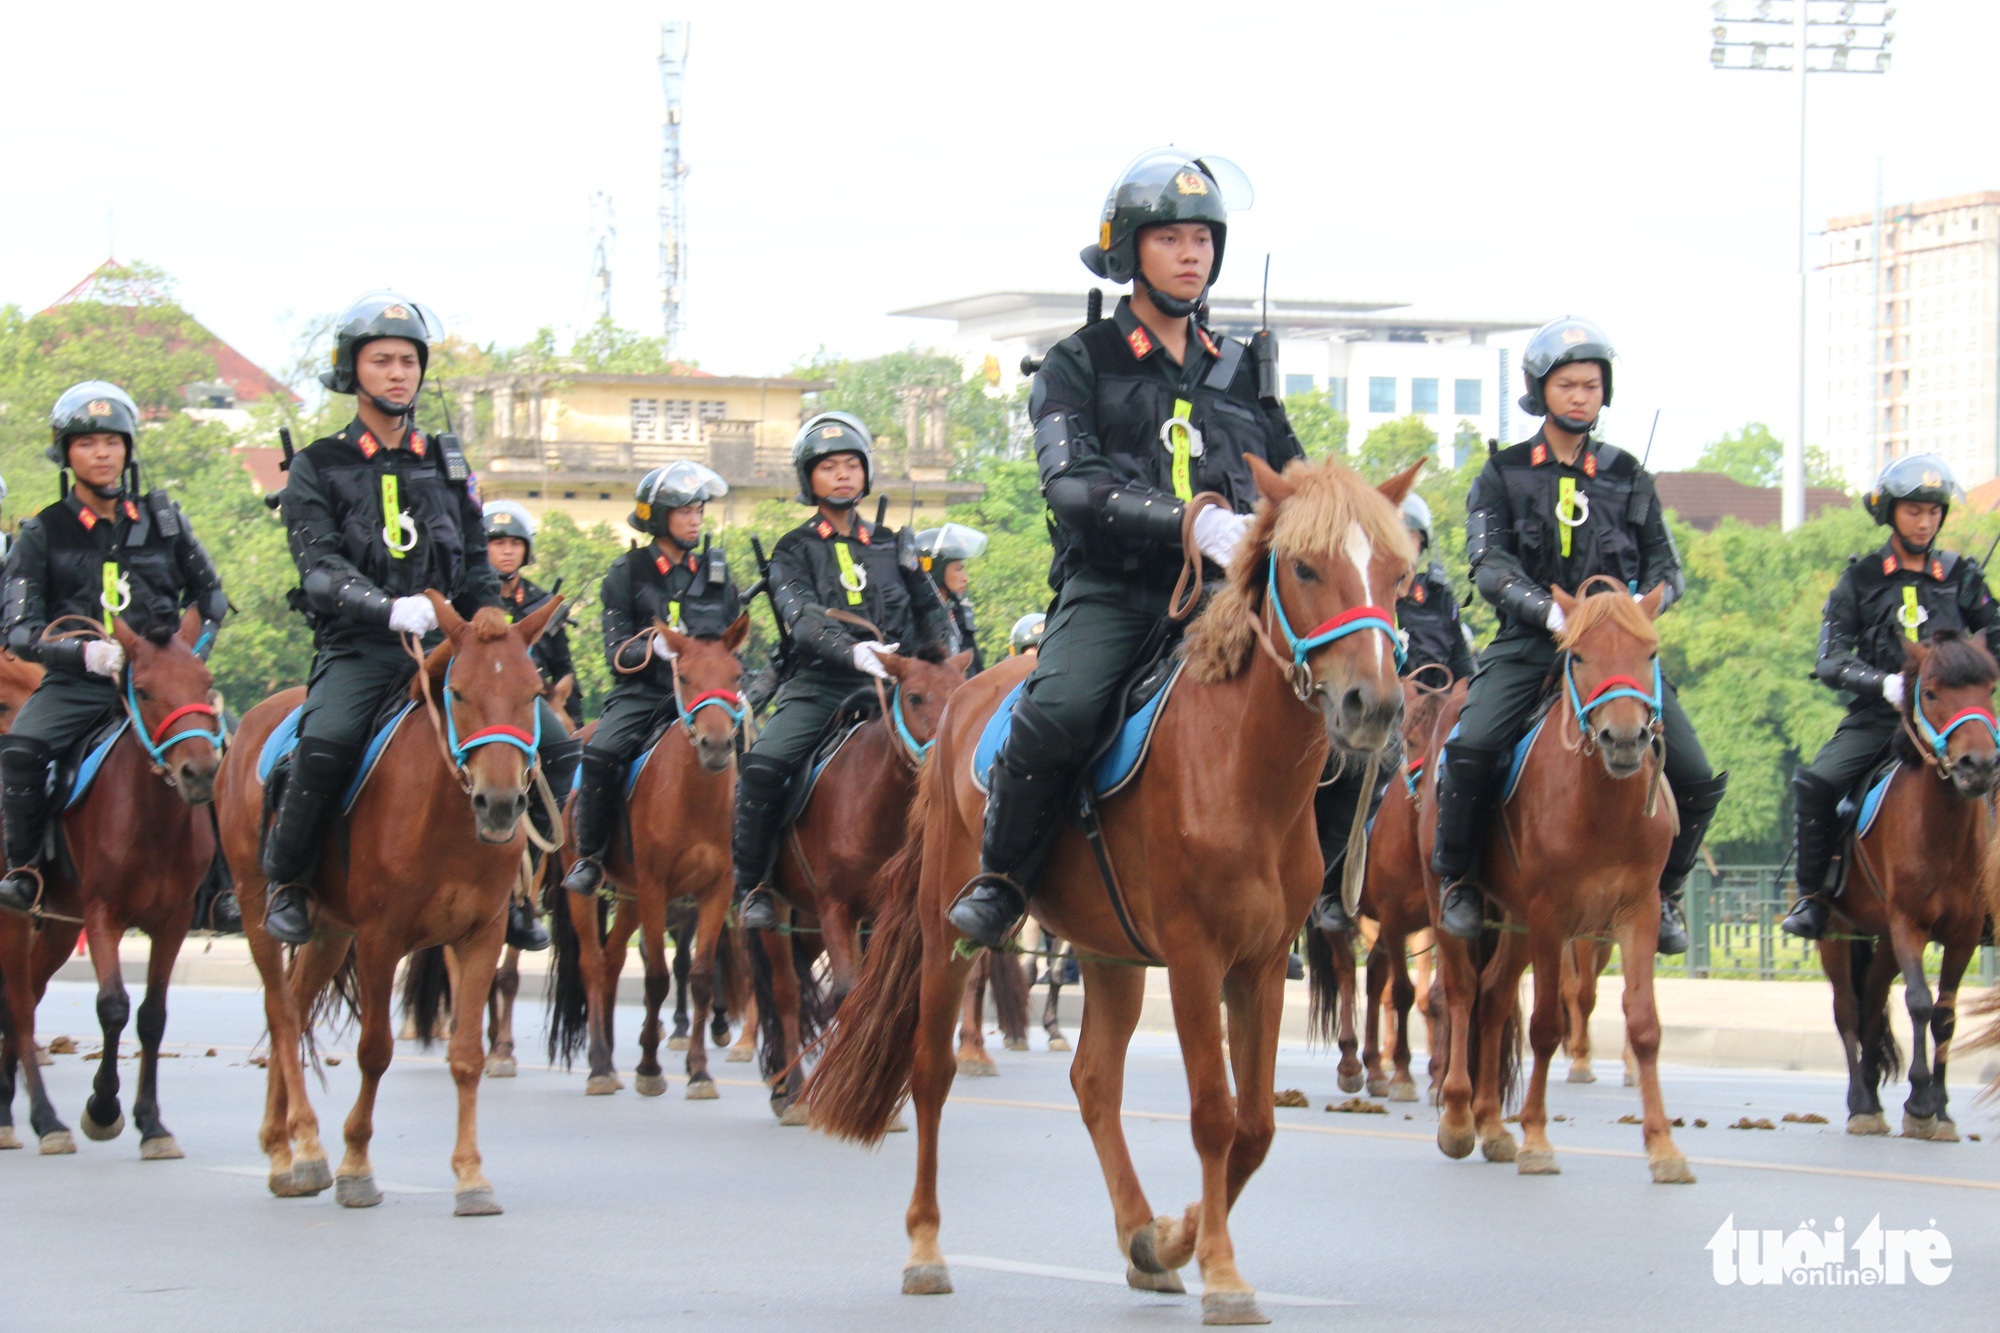 Patrol on horseback: Vietnam debuts mounted police force